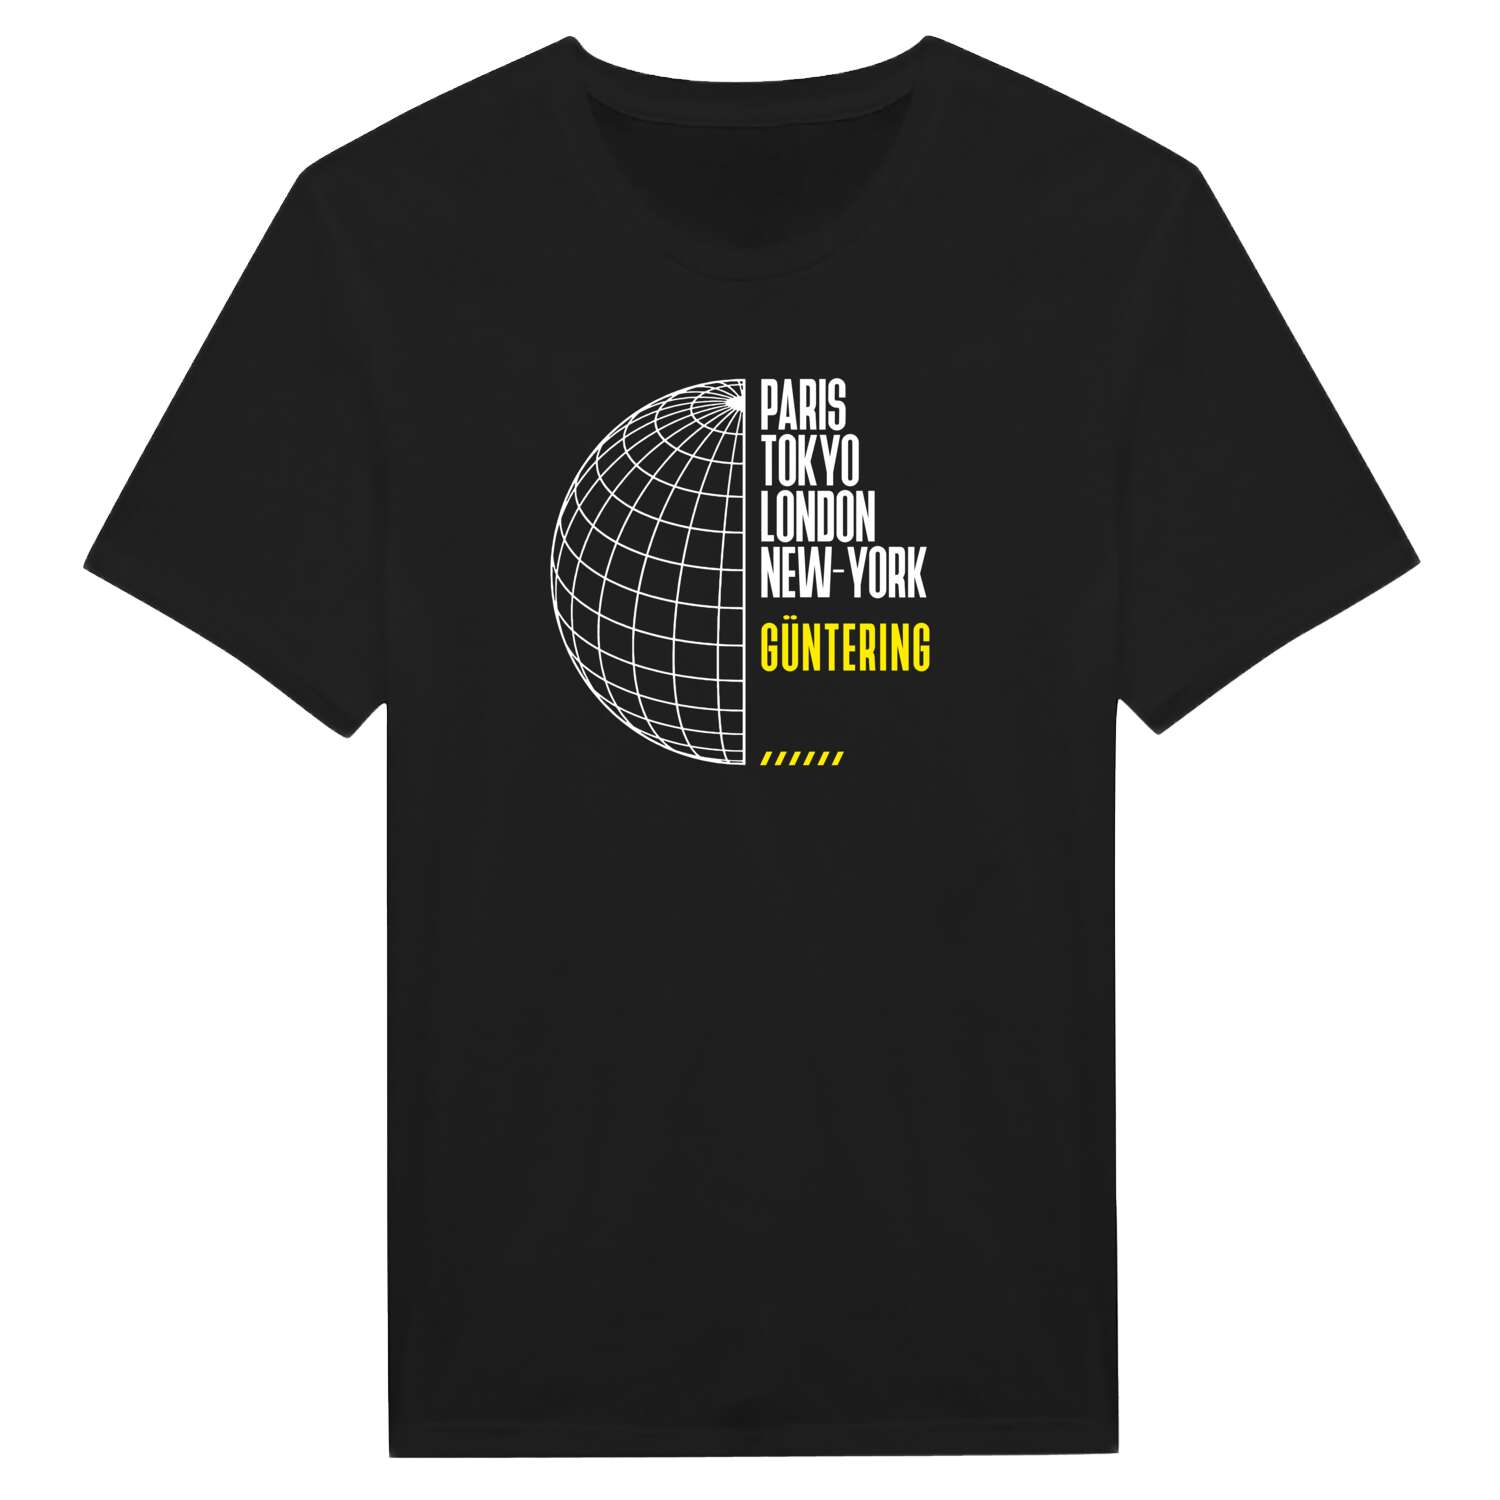 Güntering T-Shirt »Paris Tokyo London«